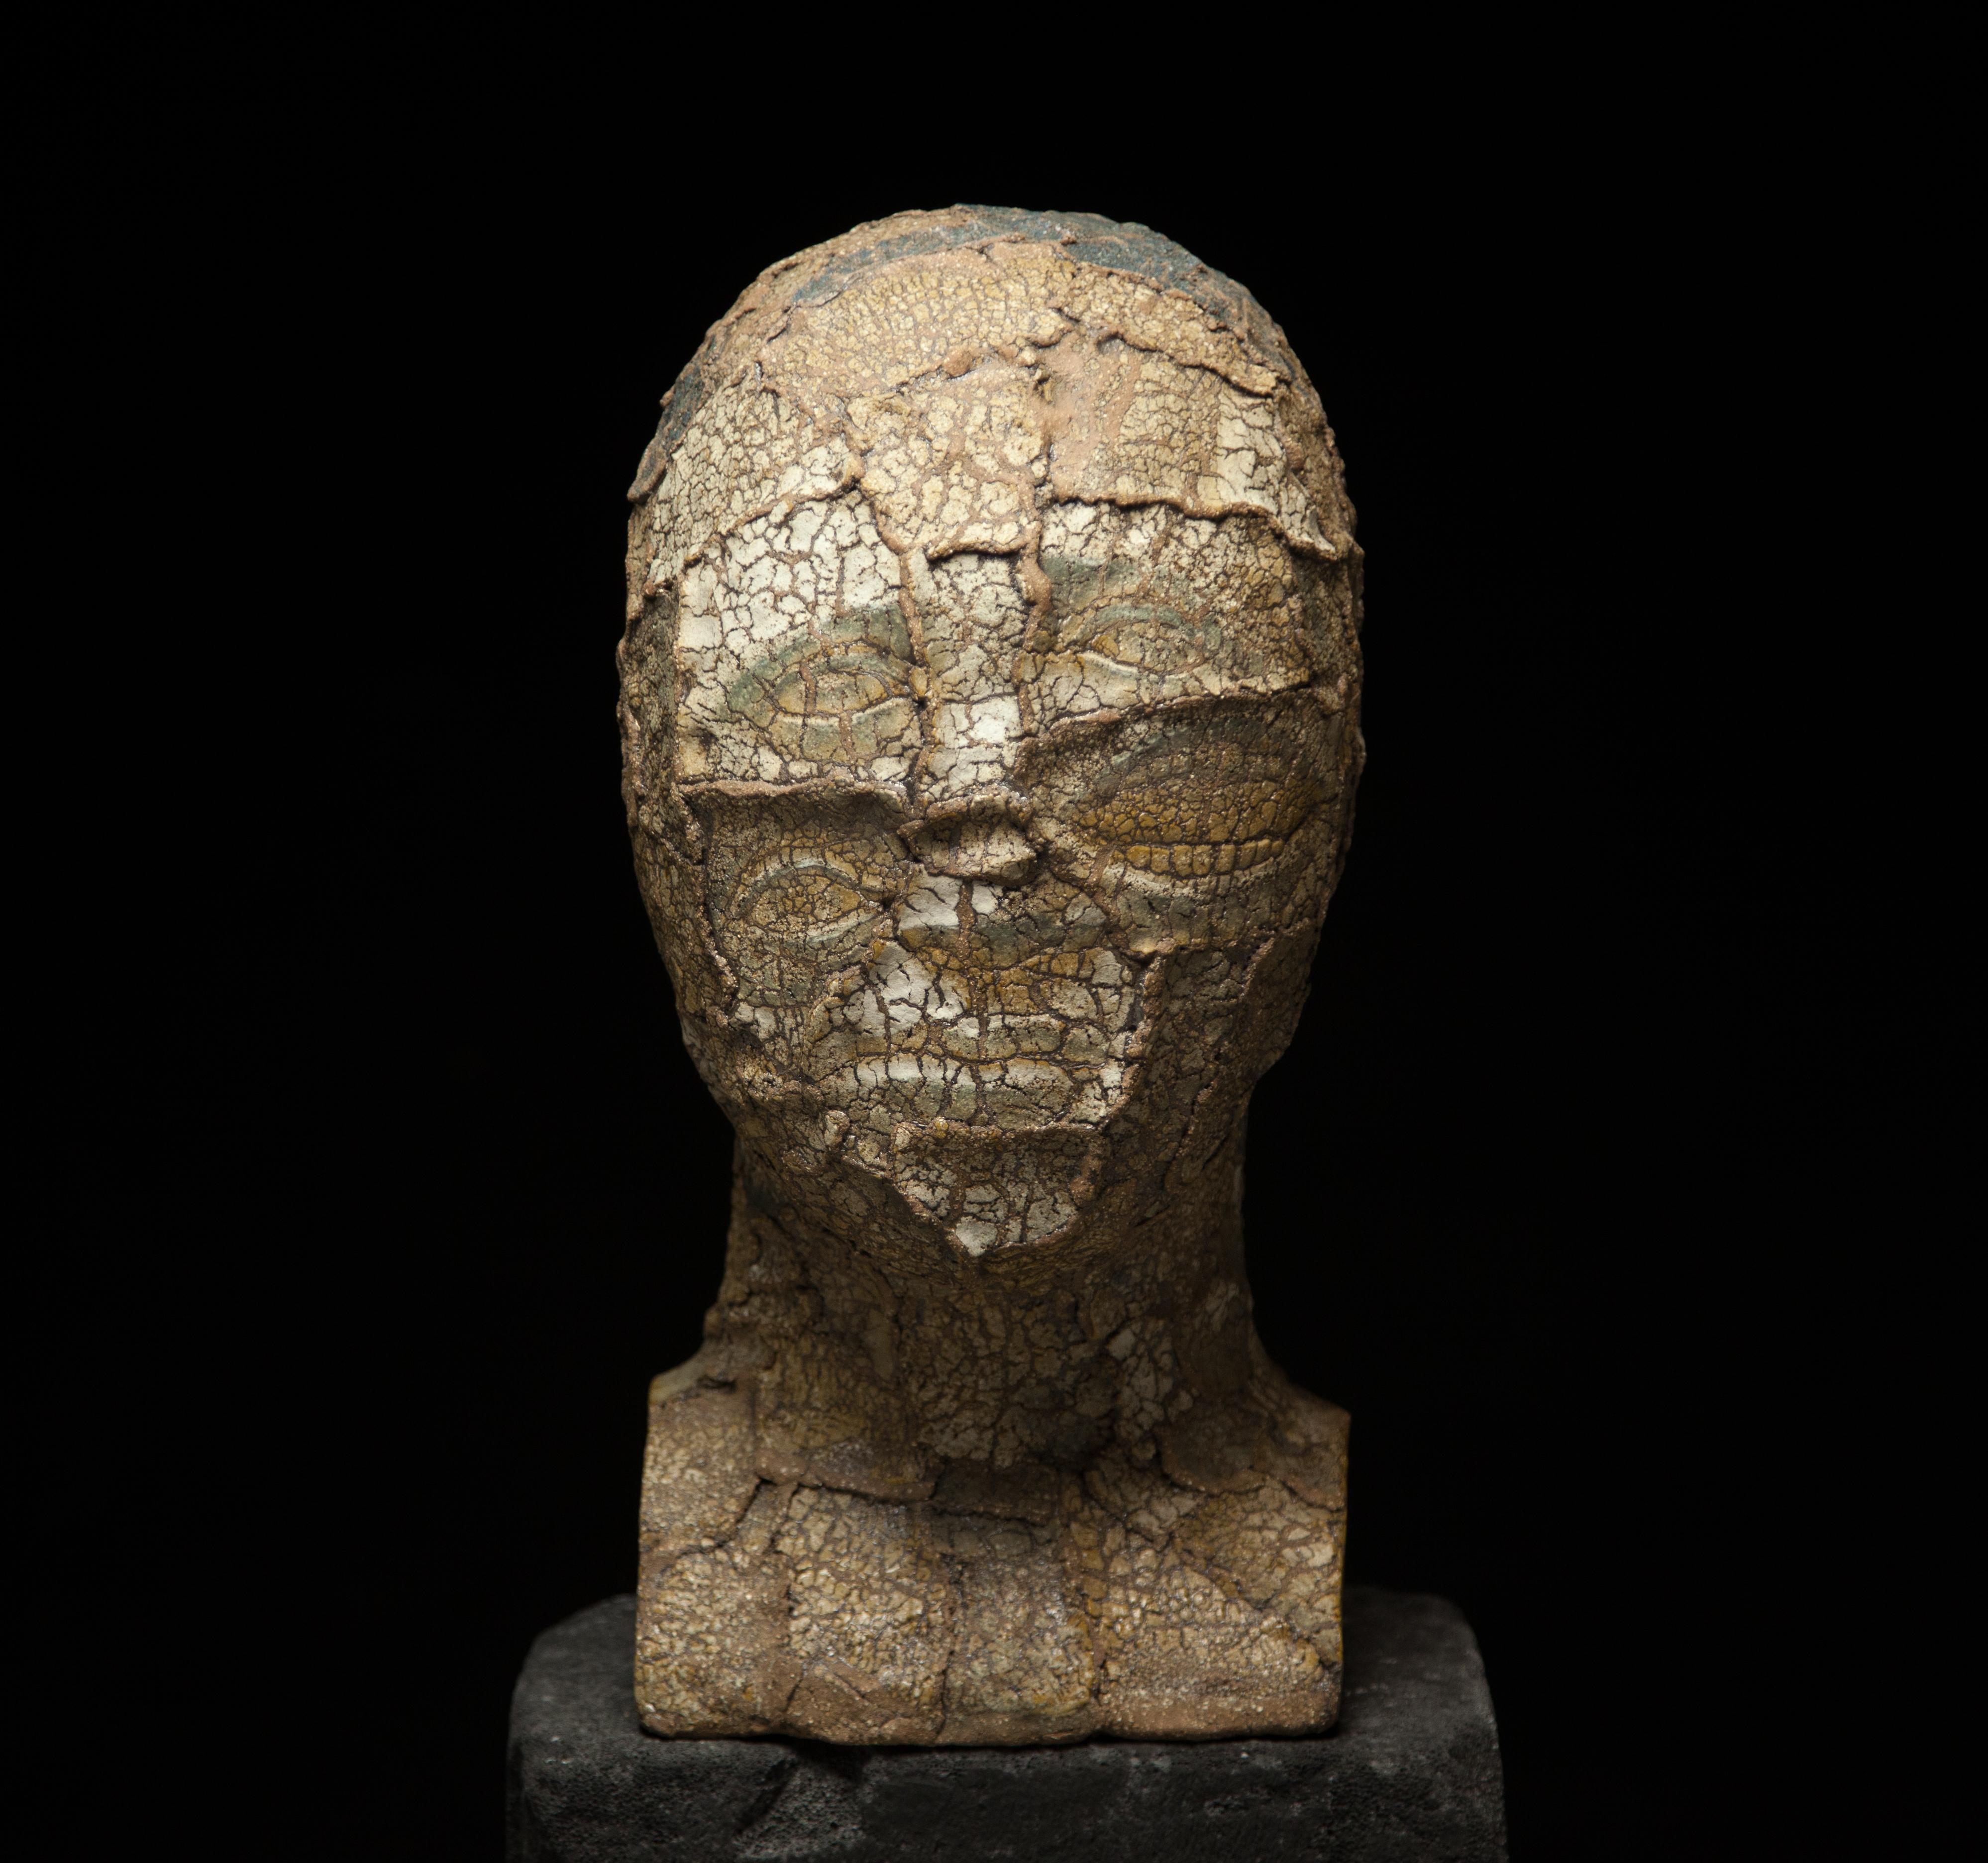 "Skin" Sculpture Ed. 1/1 17" x 8" x 9" inch by Oleksandr Miroshnychenko